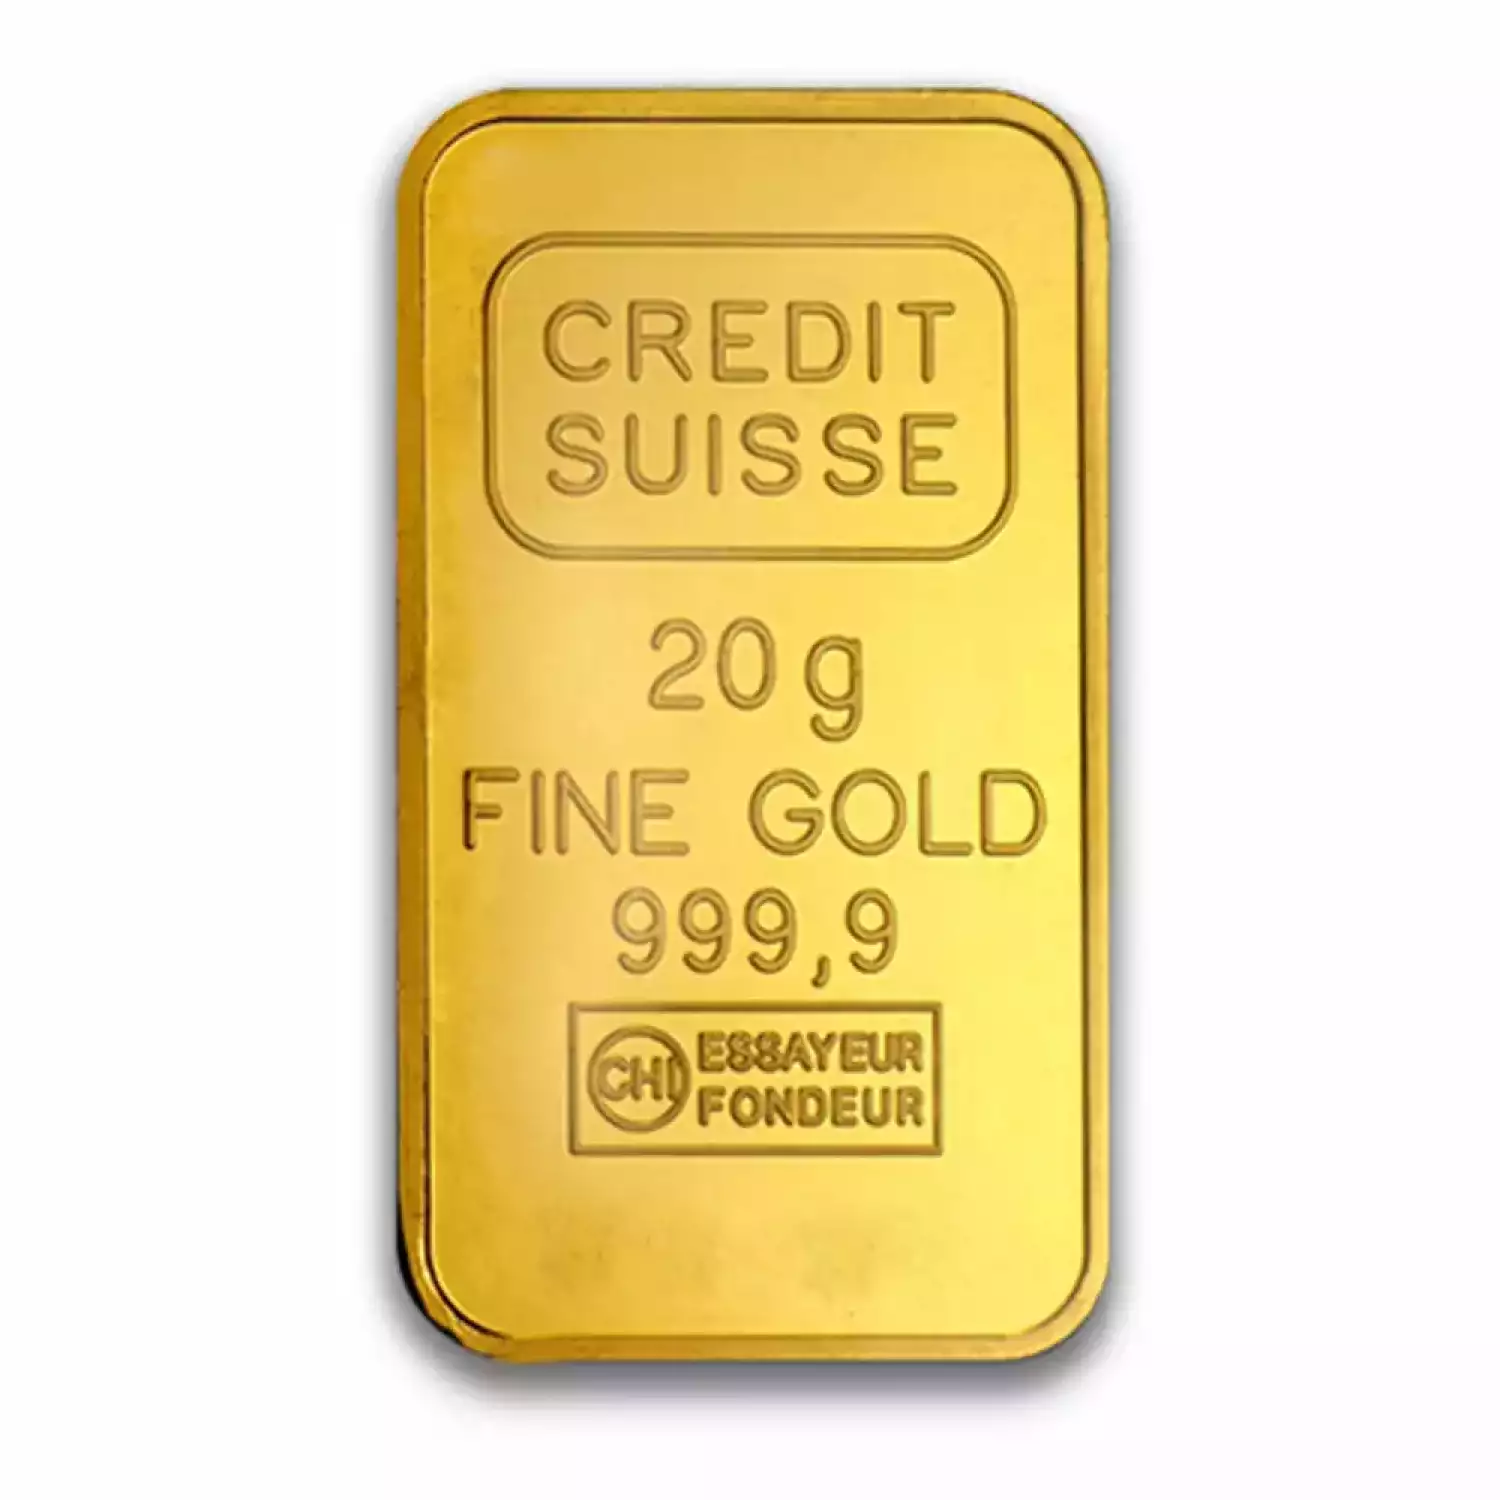 20 g Credit Suisse Gold Bullion Bar (2)